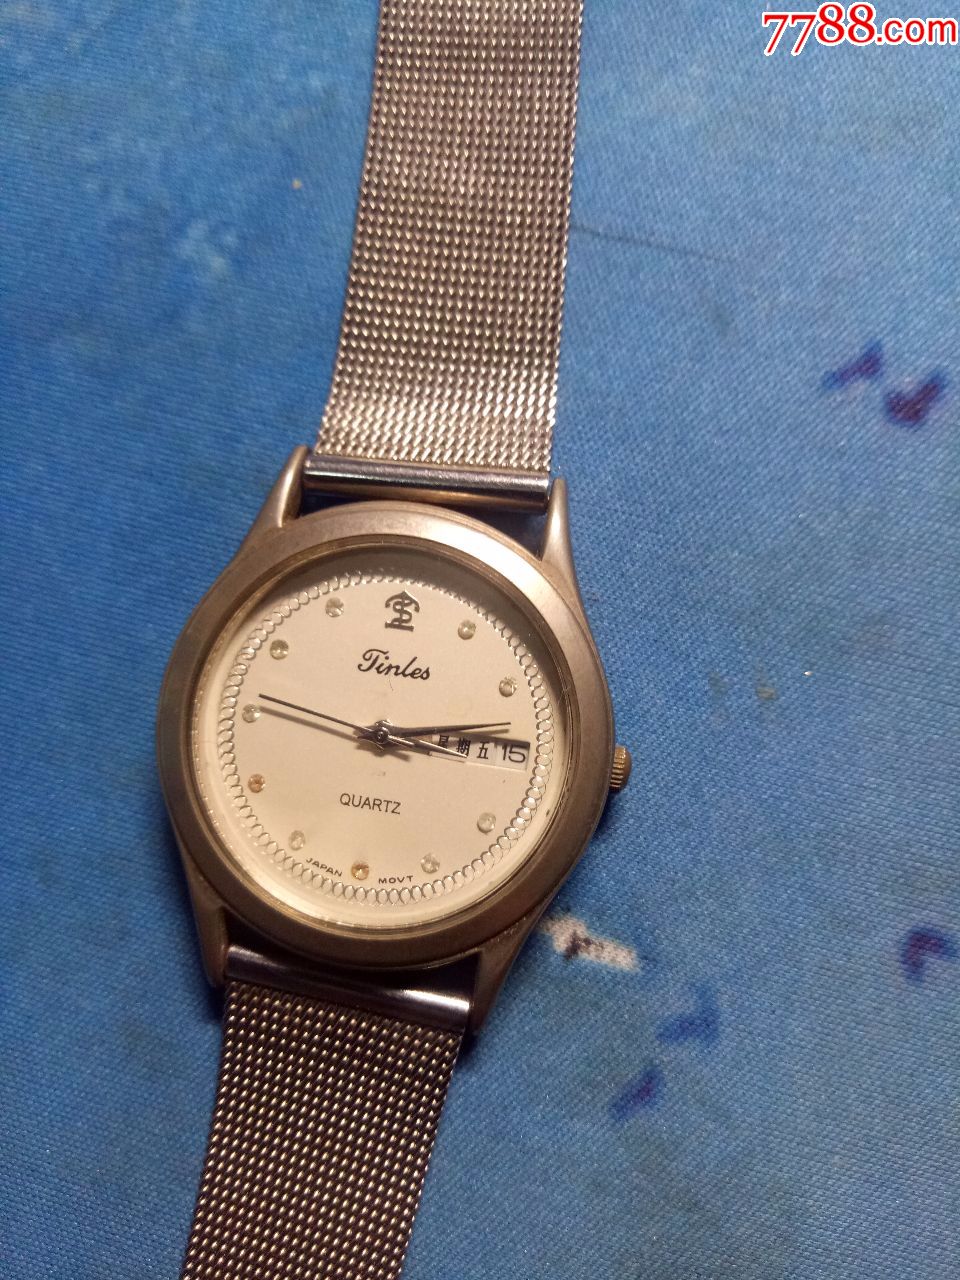 tlcclt手表1965图片图片